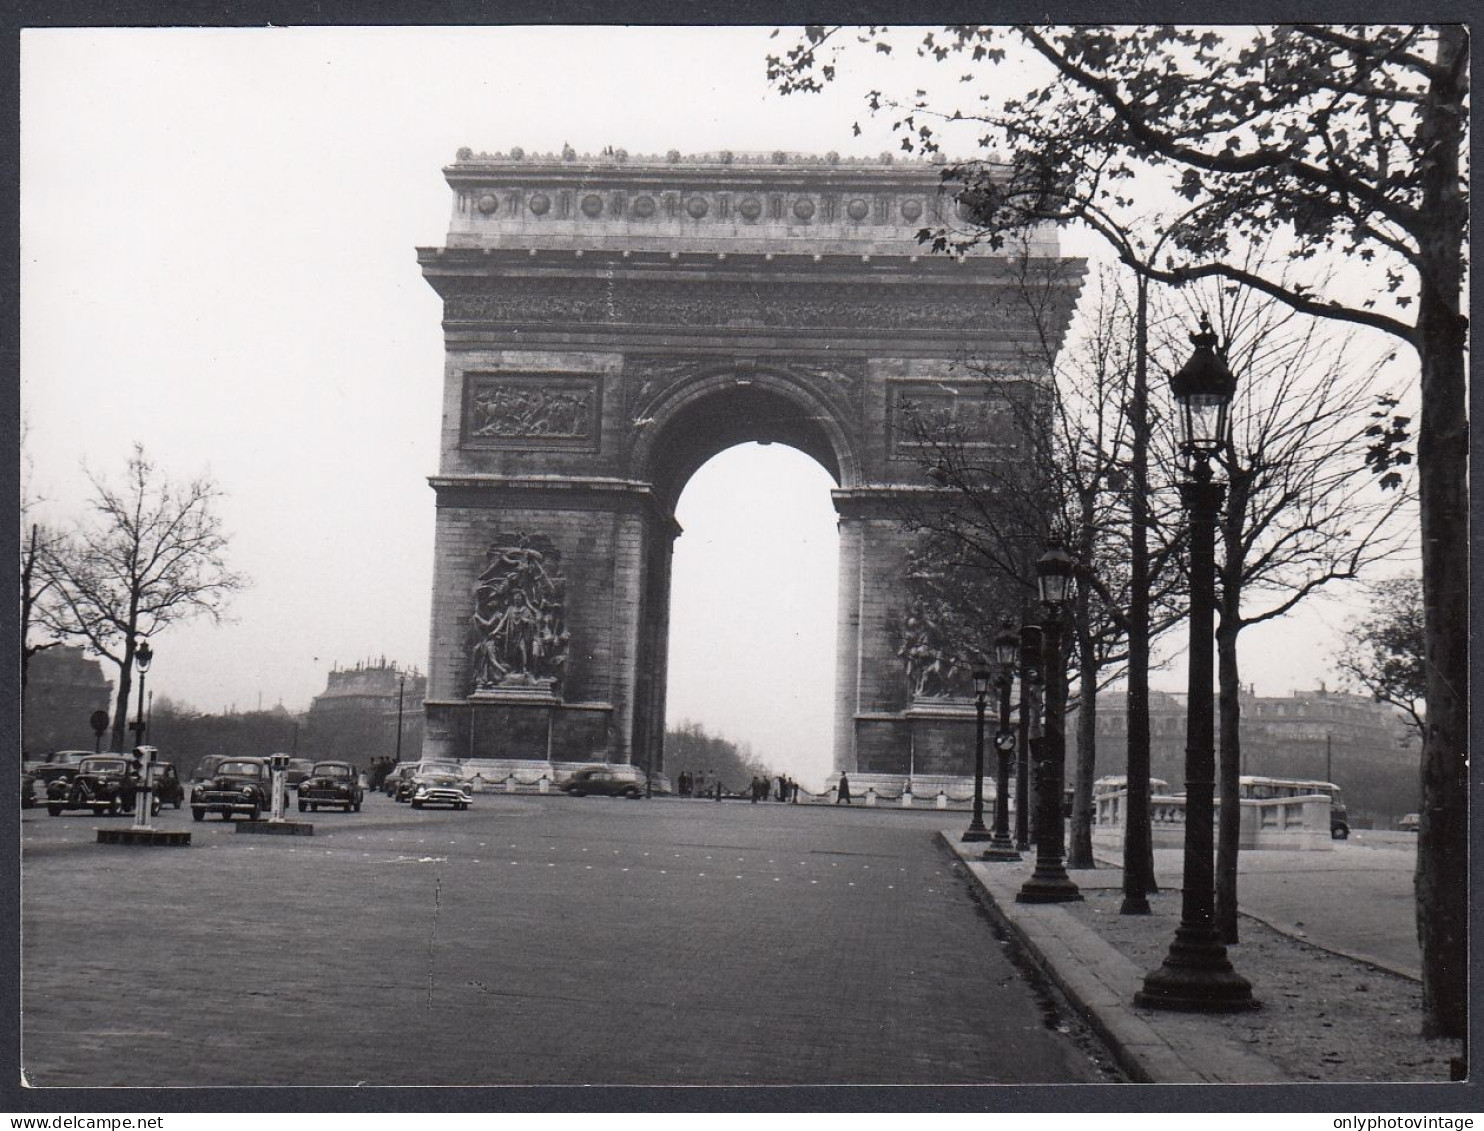 Parigi, Francia, Arco Di Trionfo, 1950 Fotografia Epoca, Vintage Photo - Lugares